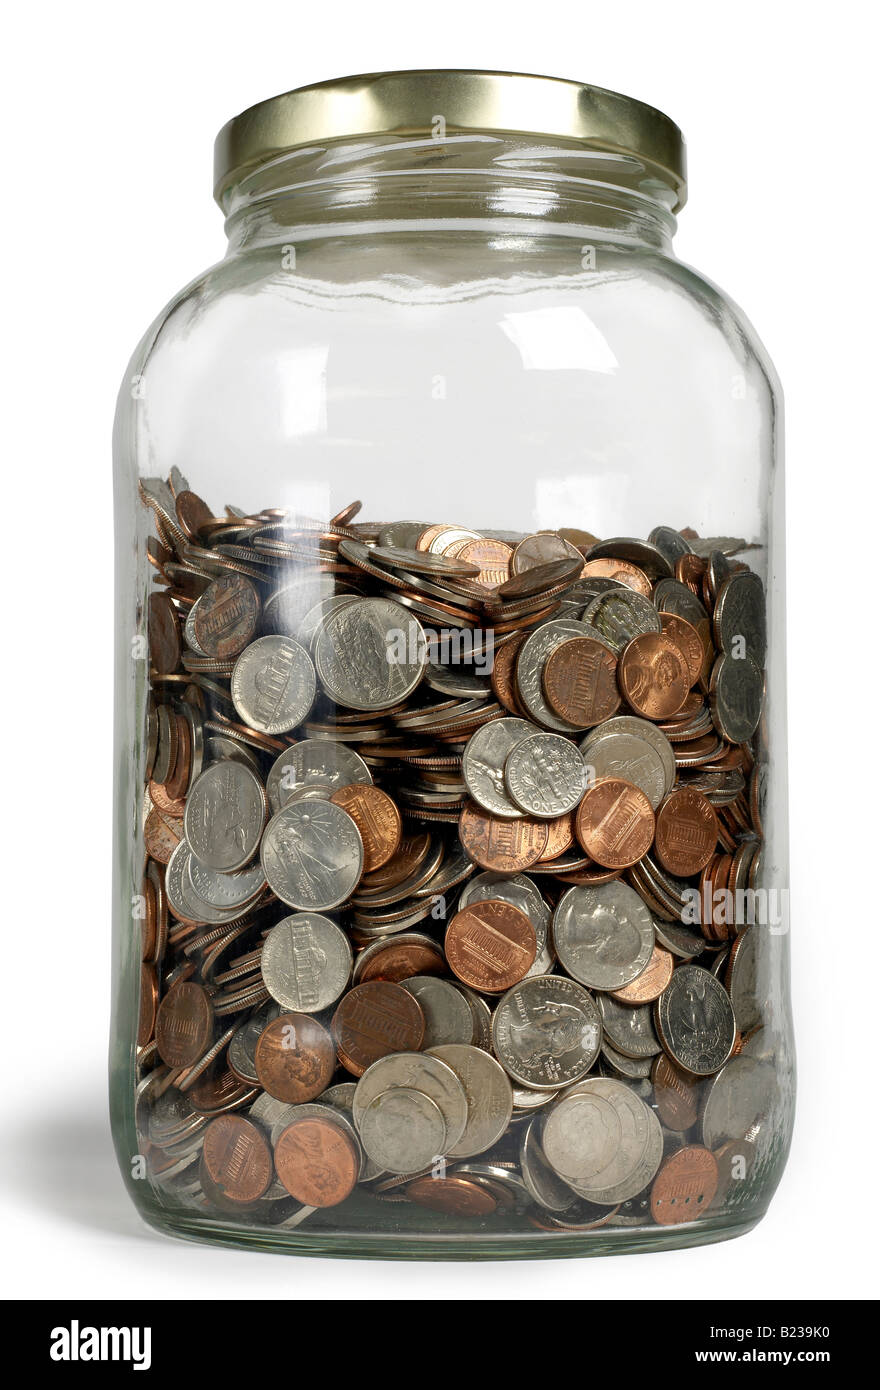 Change Coin Jar piggy bank Stock Photo - Alamy